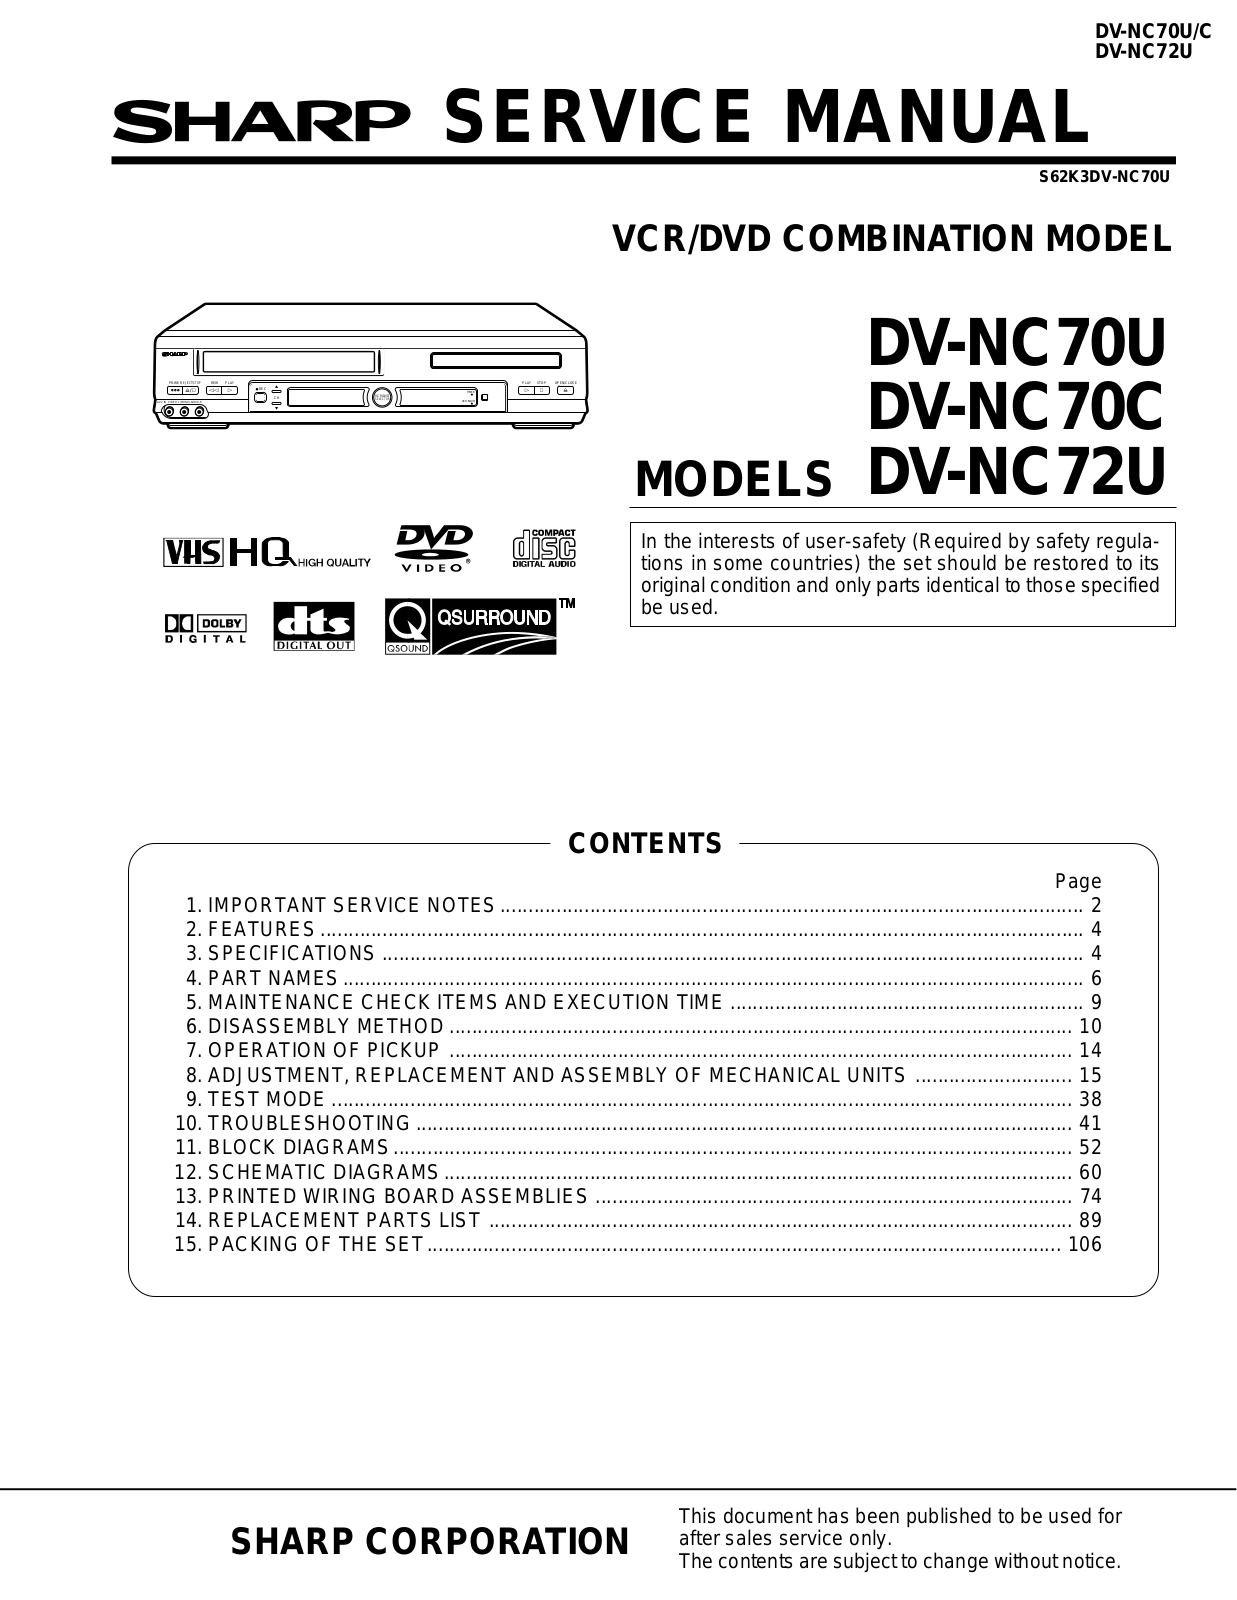 SHARP DVNC70, DV-NC70U, DV-NC70C, DV-NC72U. Service Manual